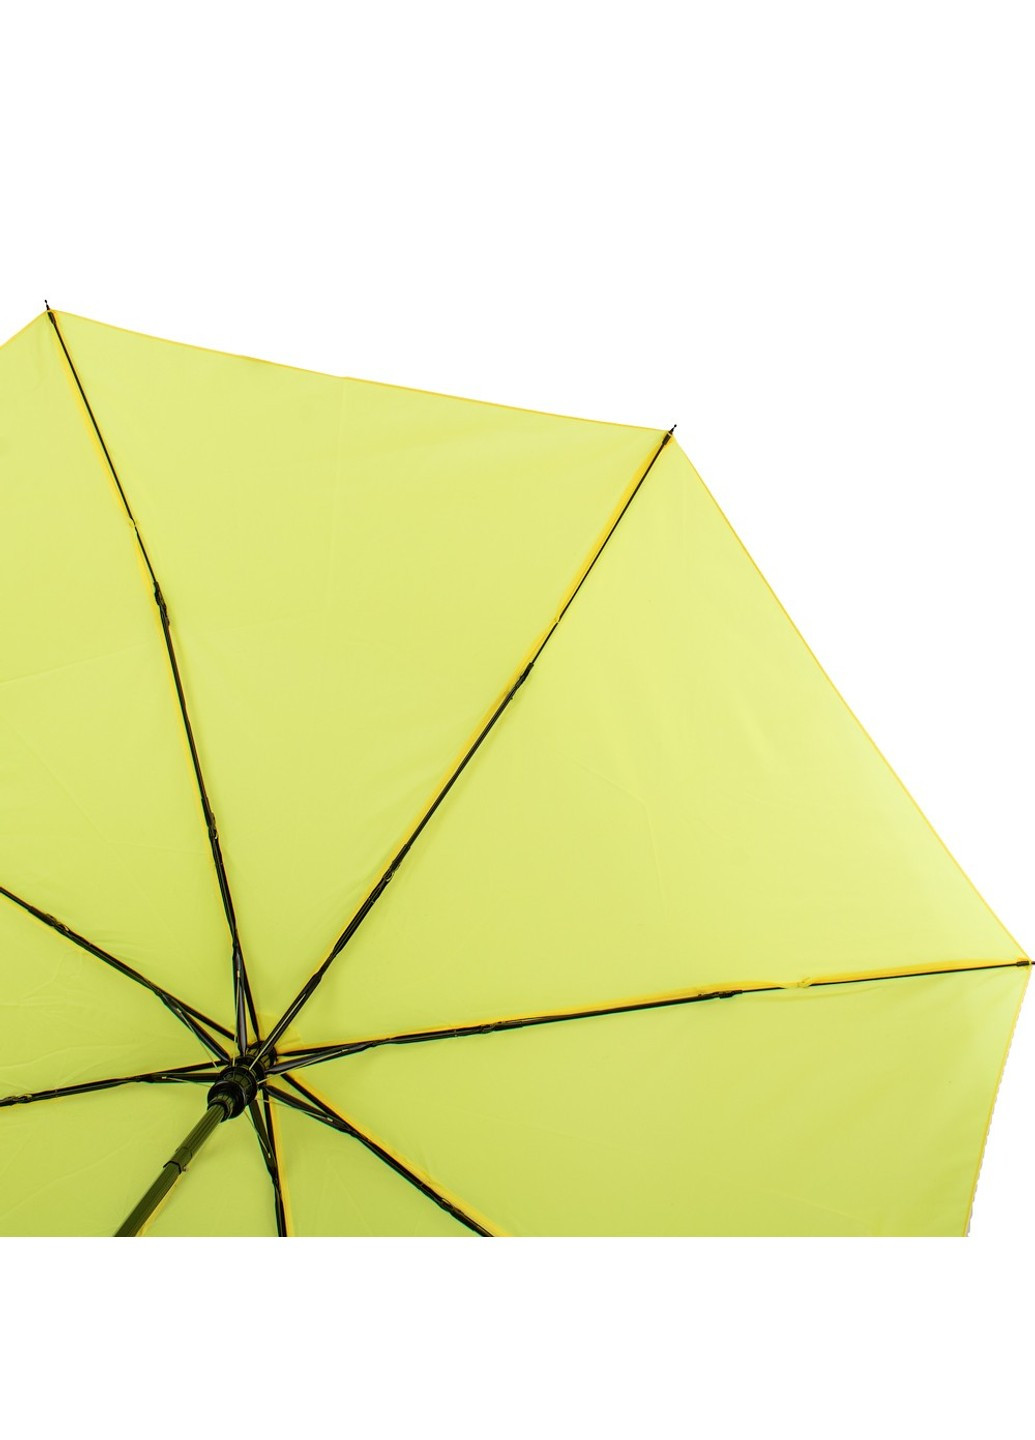 Зонт женский полуавтомат U45404 Happy Rain (262976702)